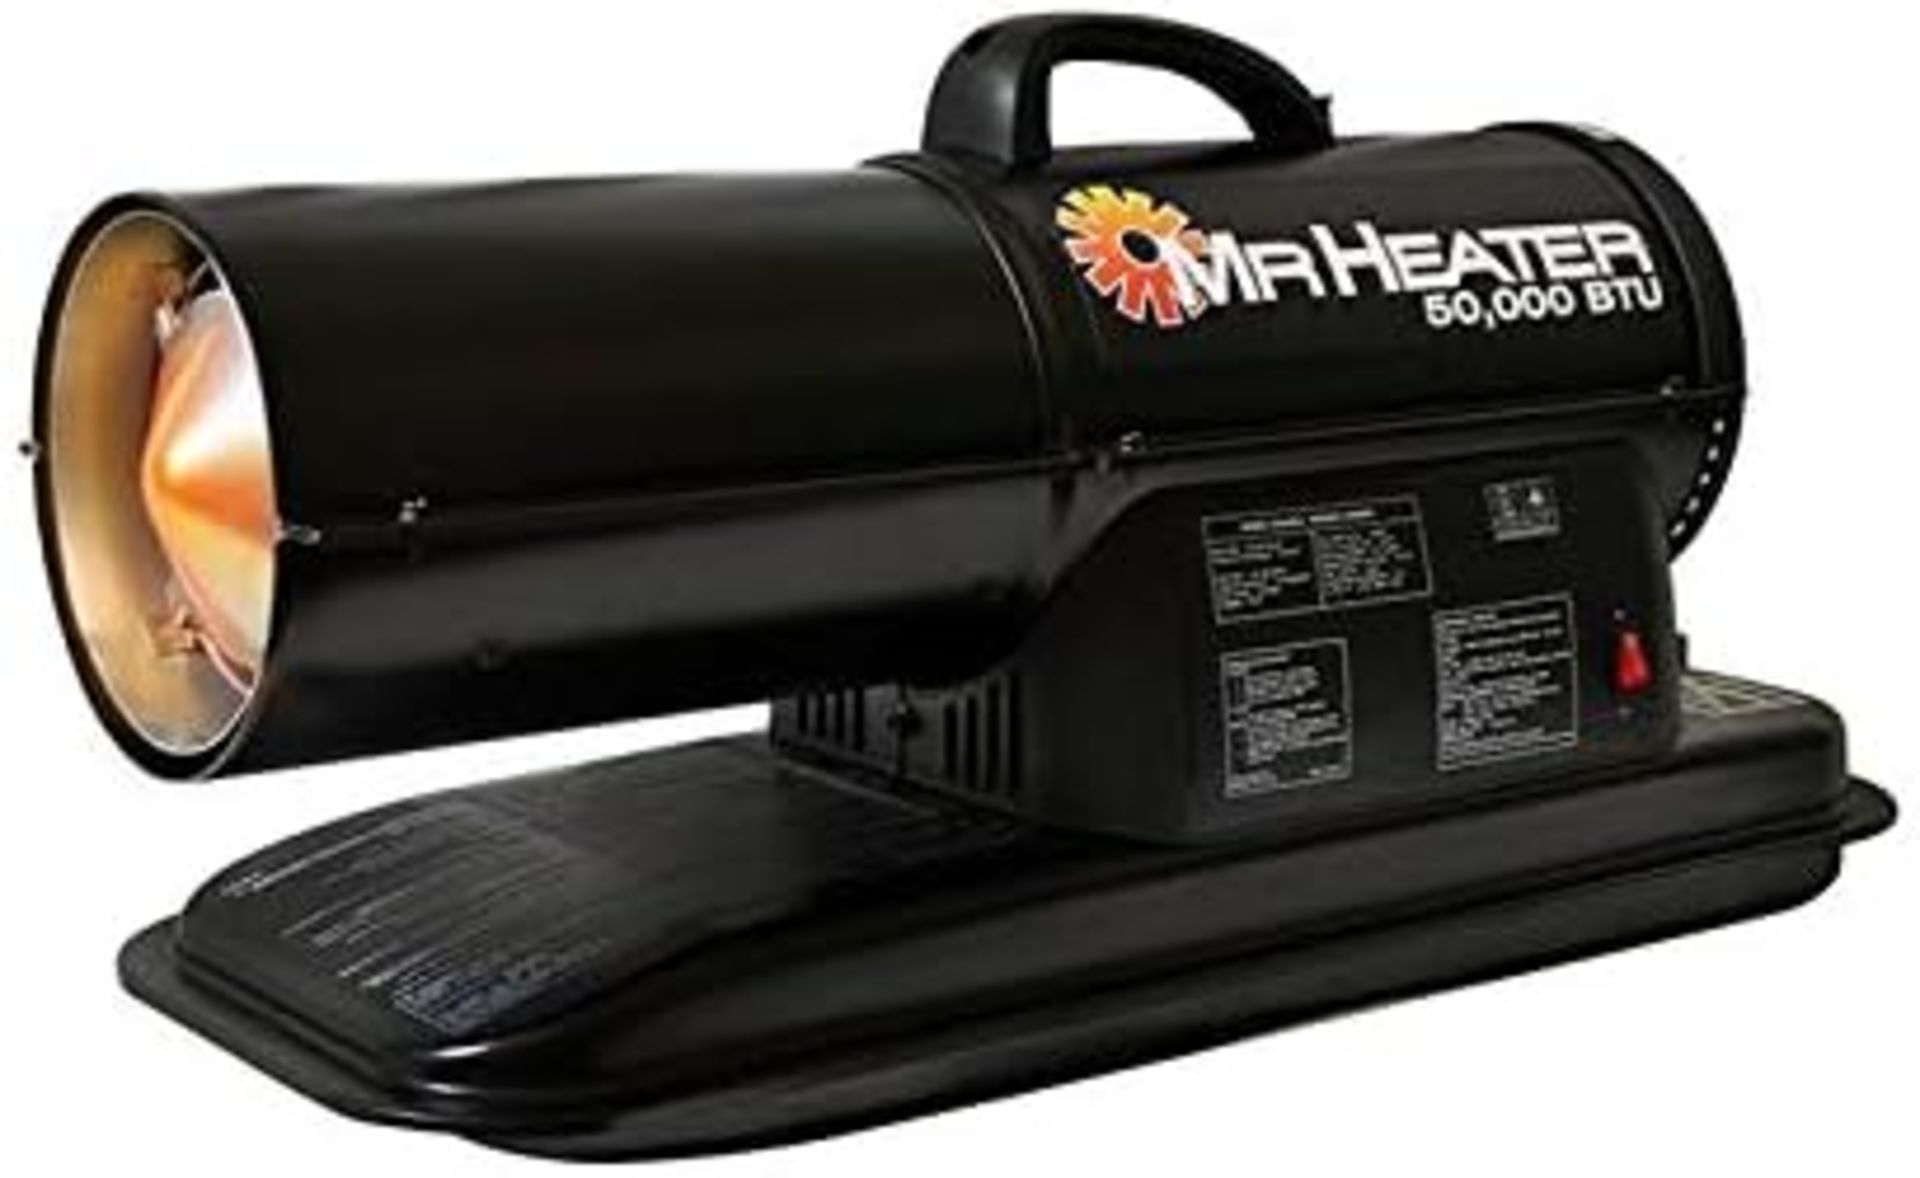 Brand New Mr. Heater Forced Air 50,000 BTU Kerosene Heater, 50,000 BTU per hour Heats up to 1,250